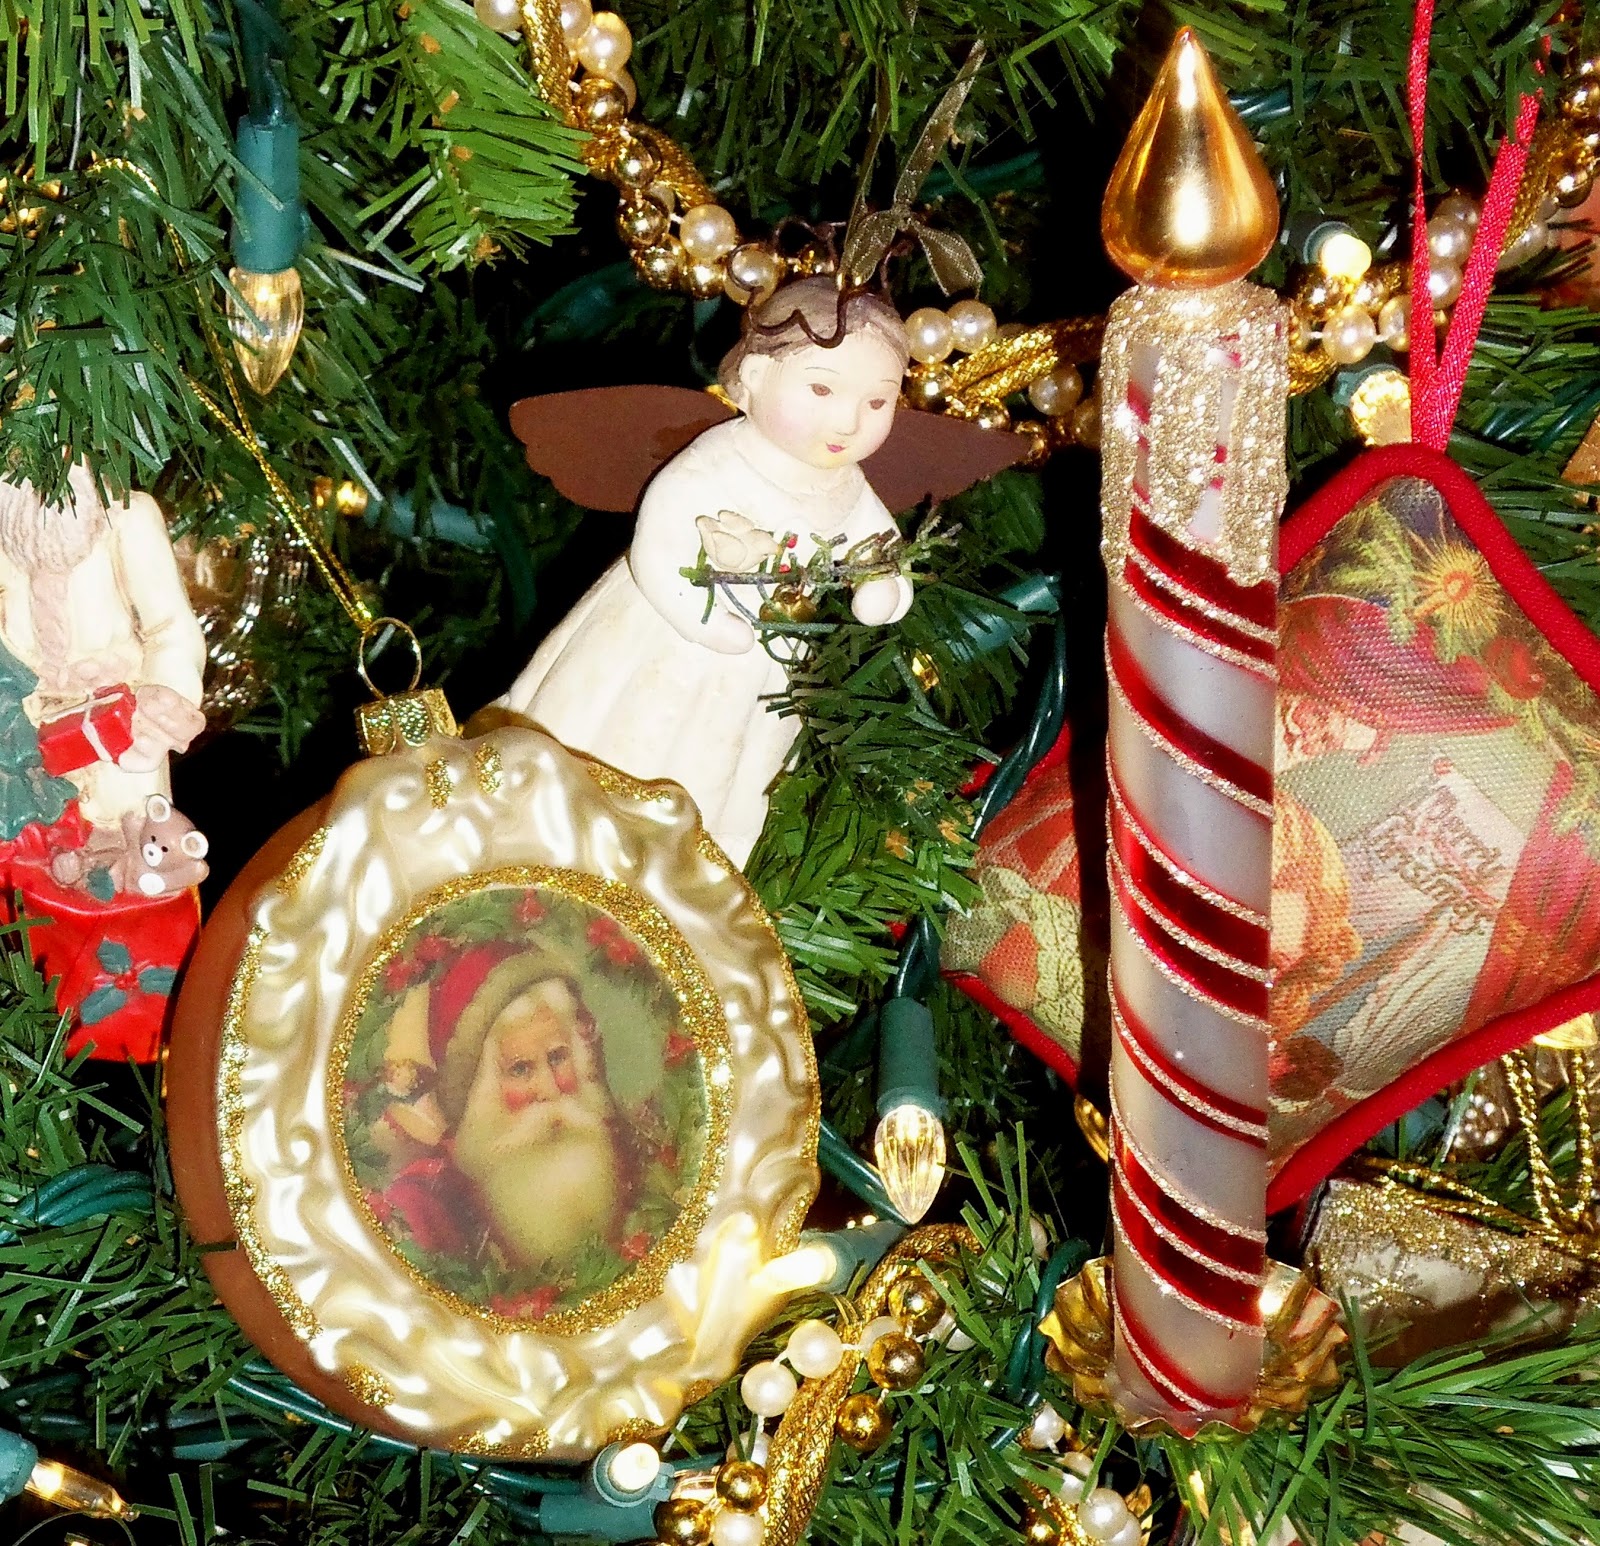 A DEBBIE-DABBLE CHRISTMAS: Living Room Tree & Village, Part 3 ...